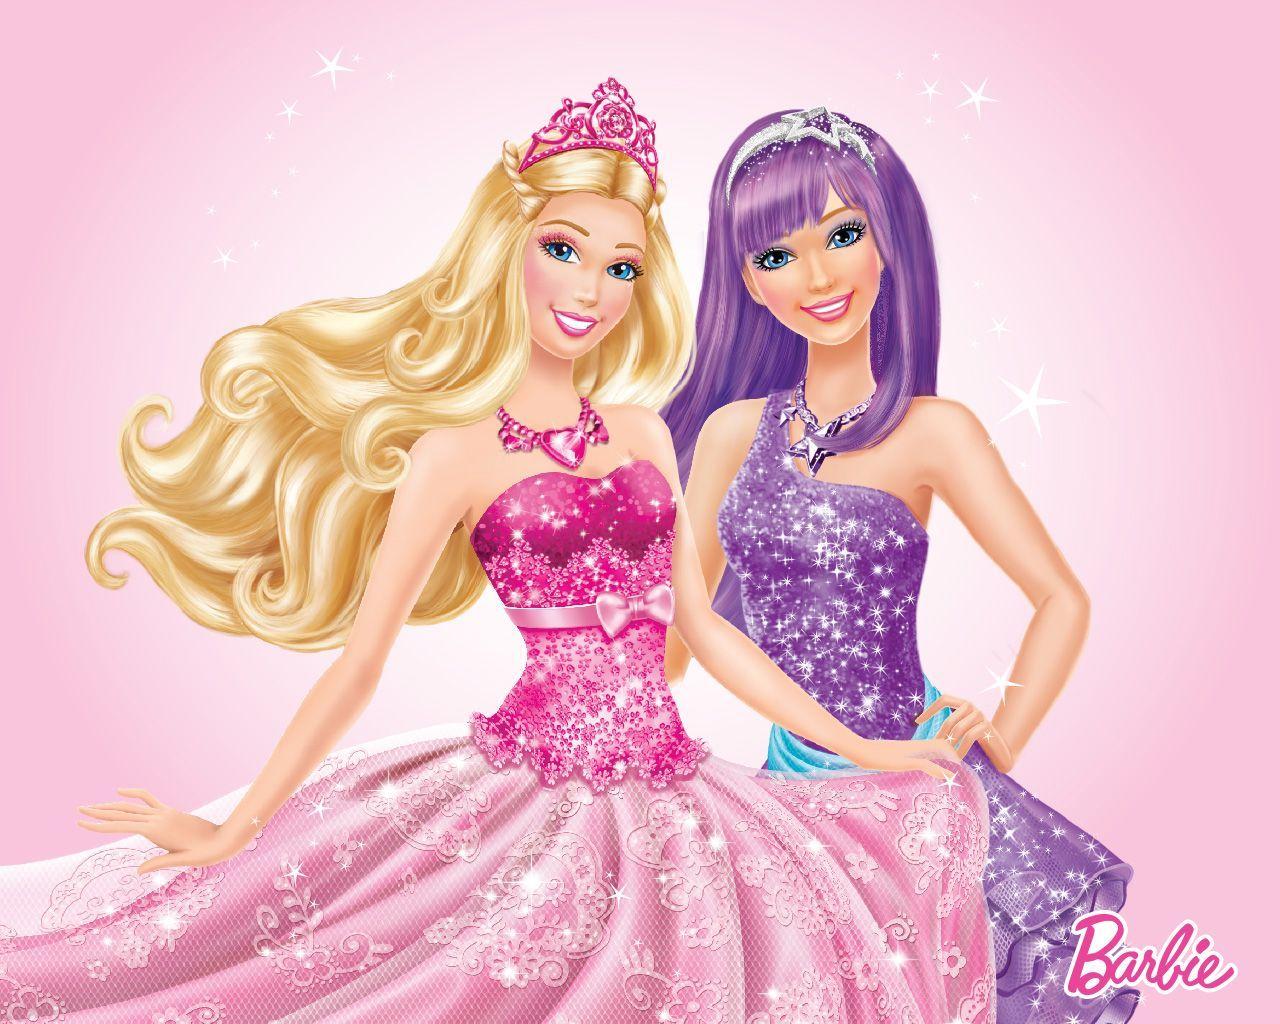 Barbie Movies Wallpaper: PaP Wallpaper Like Thingies!. Barbie Cartoon, Barbie Movies, Barbie Princess